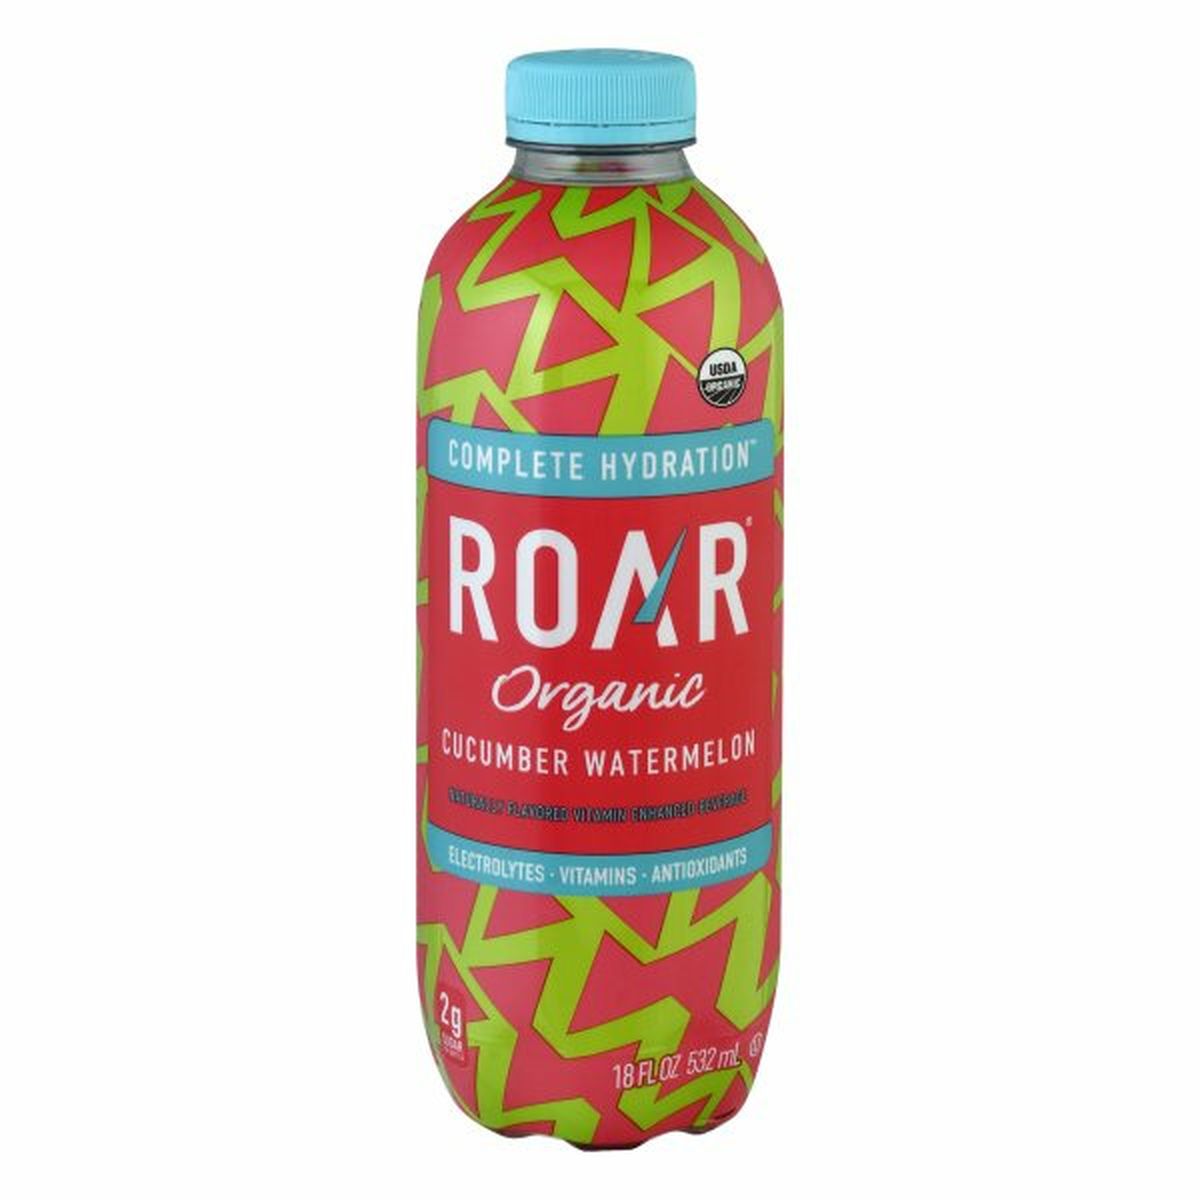 Calories in Roar Complete Hydration Vitamin Enhanced Beverage, Organic, Cucumber Watermelon